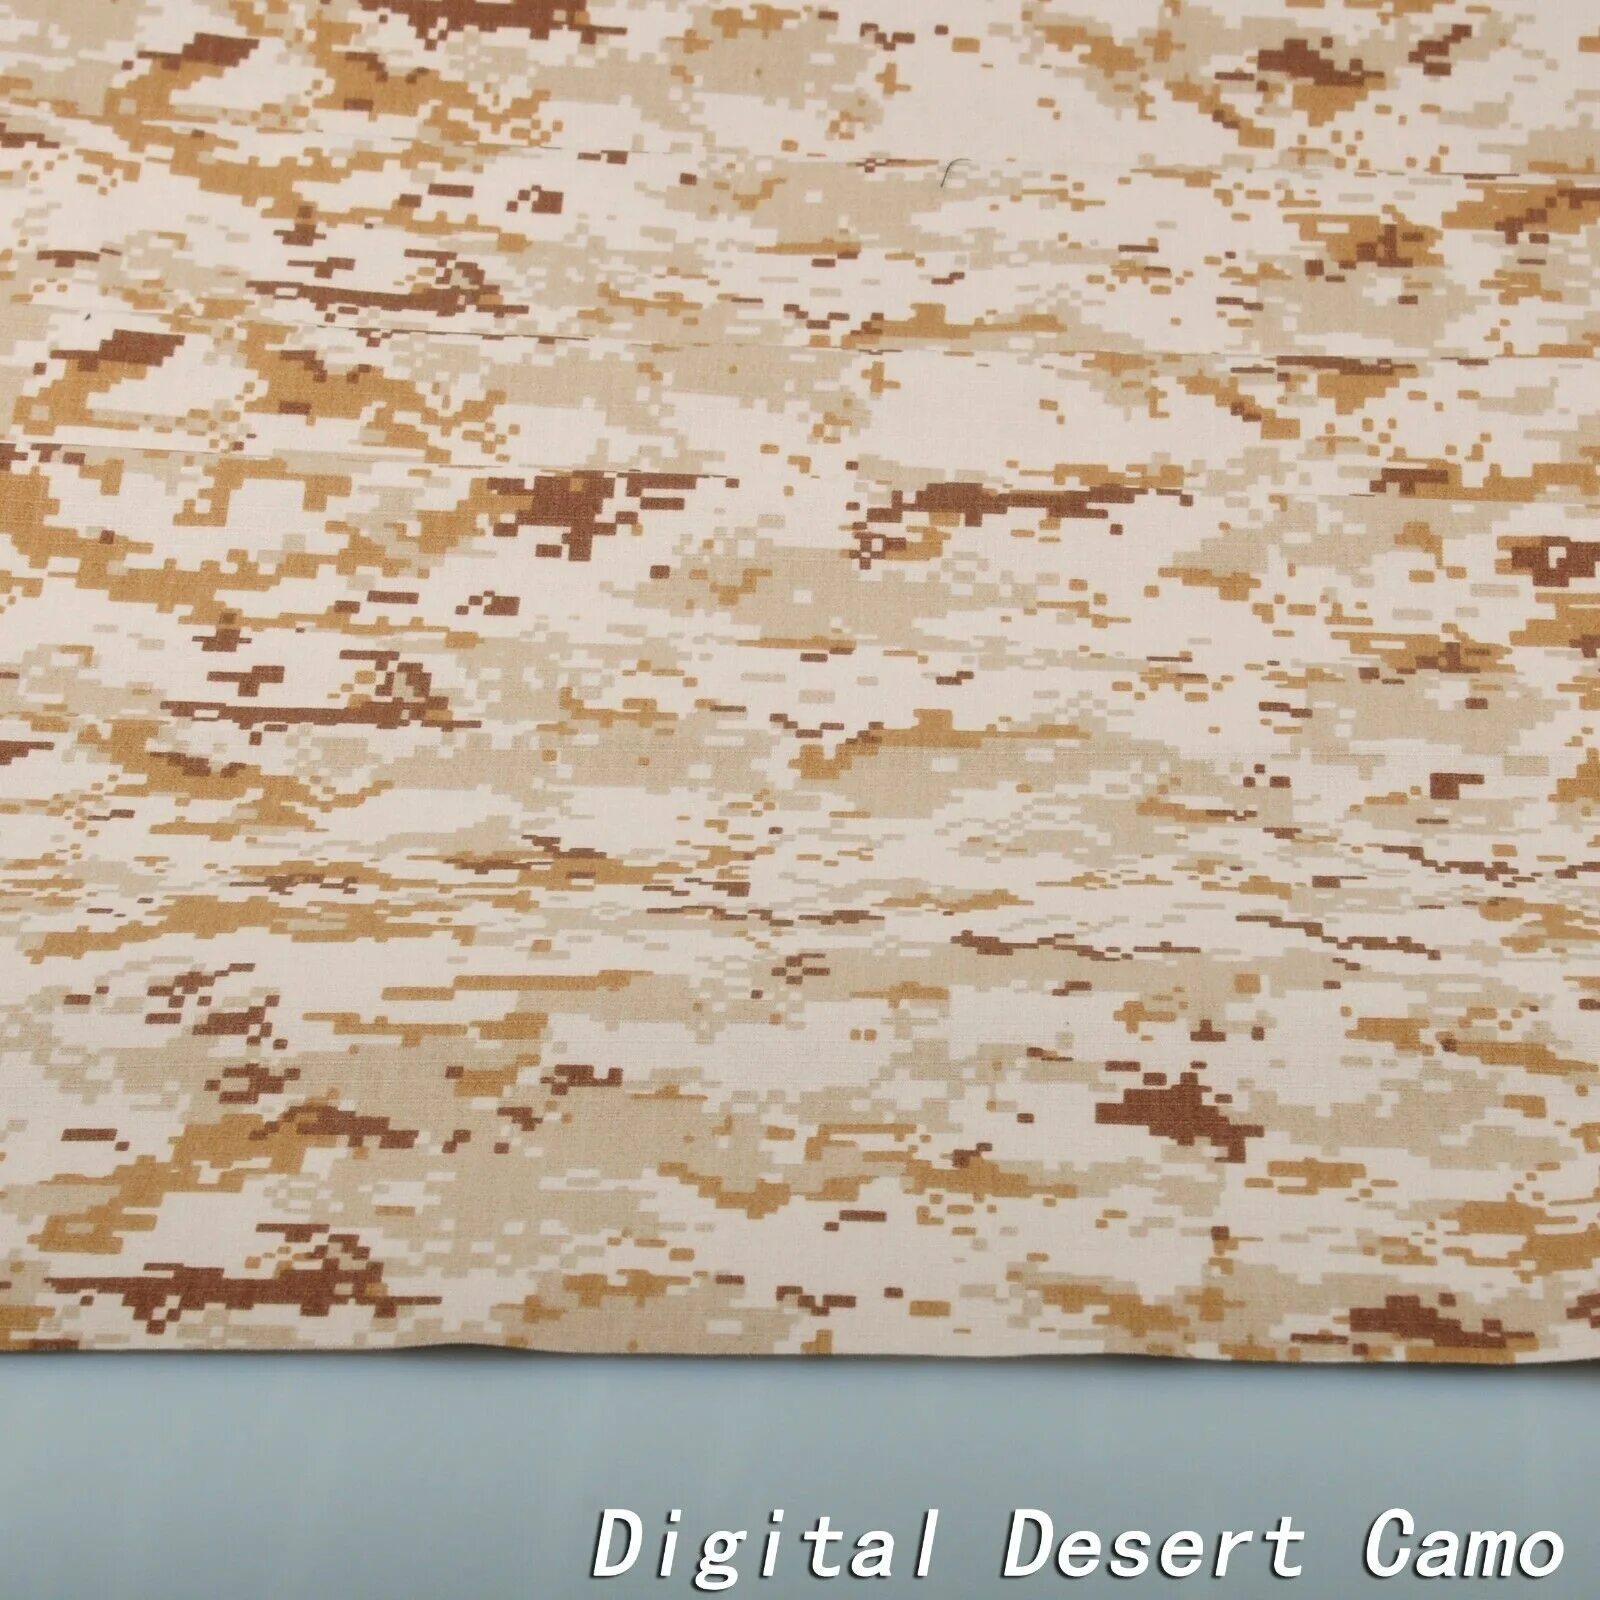 Digital Desert камуфляж. Digital Desert Camo. Пустынный камуфляж. Цифровой камуфляж пустыня. Военный хлопок